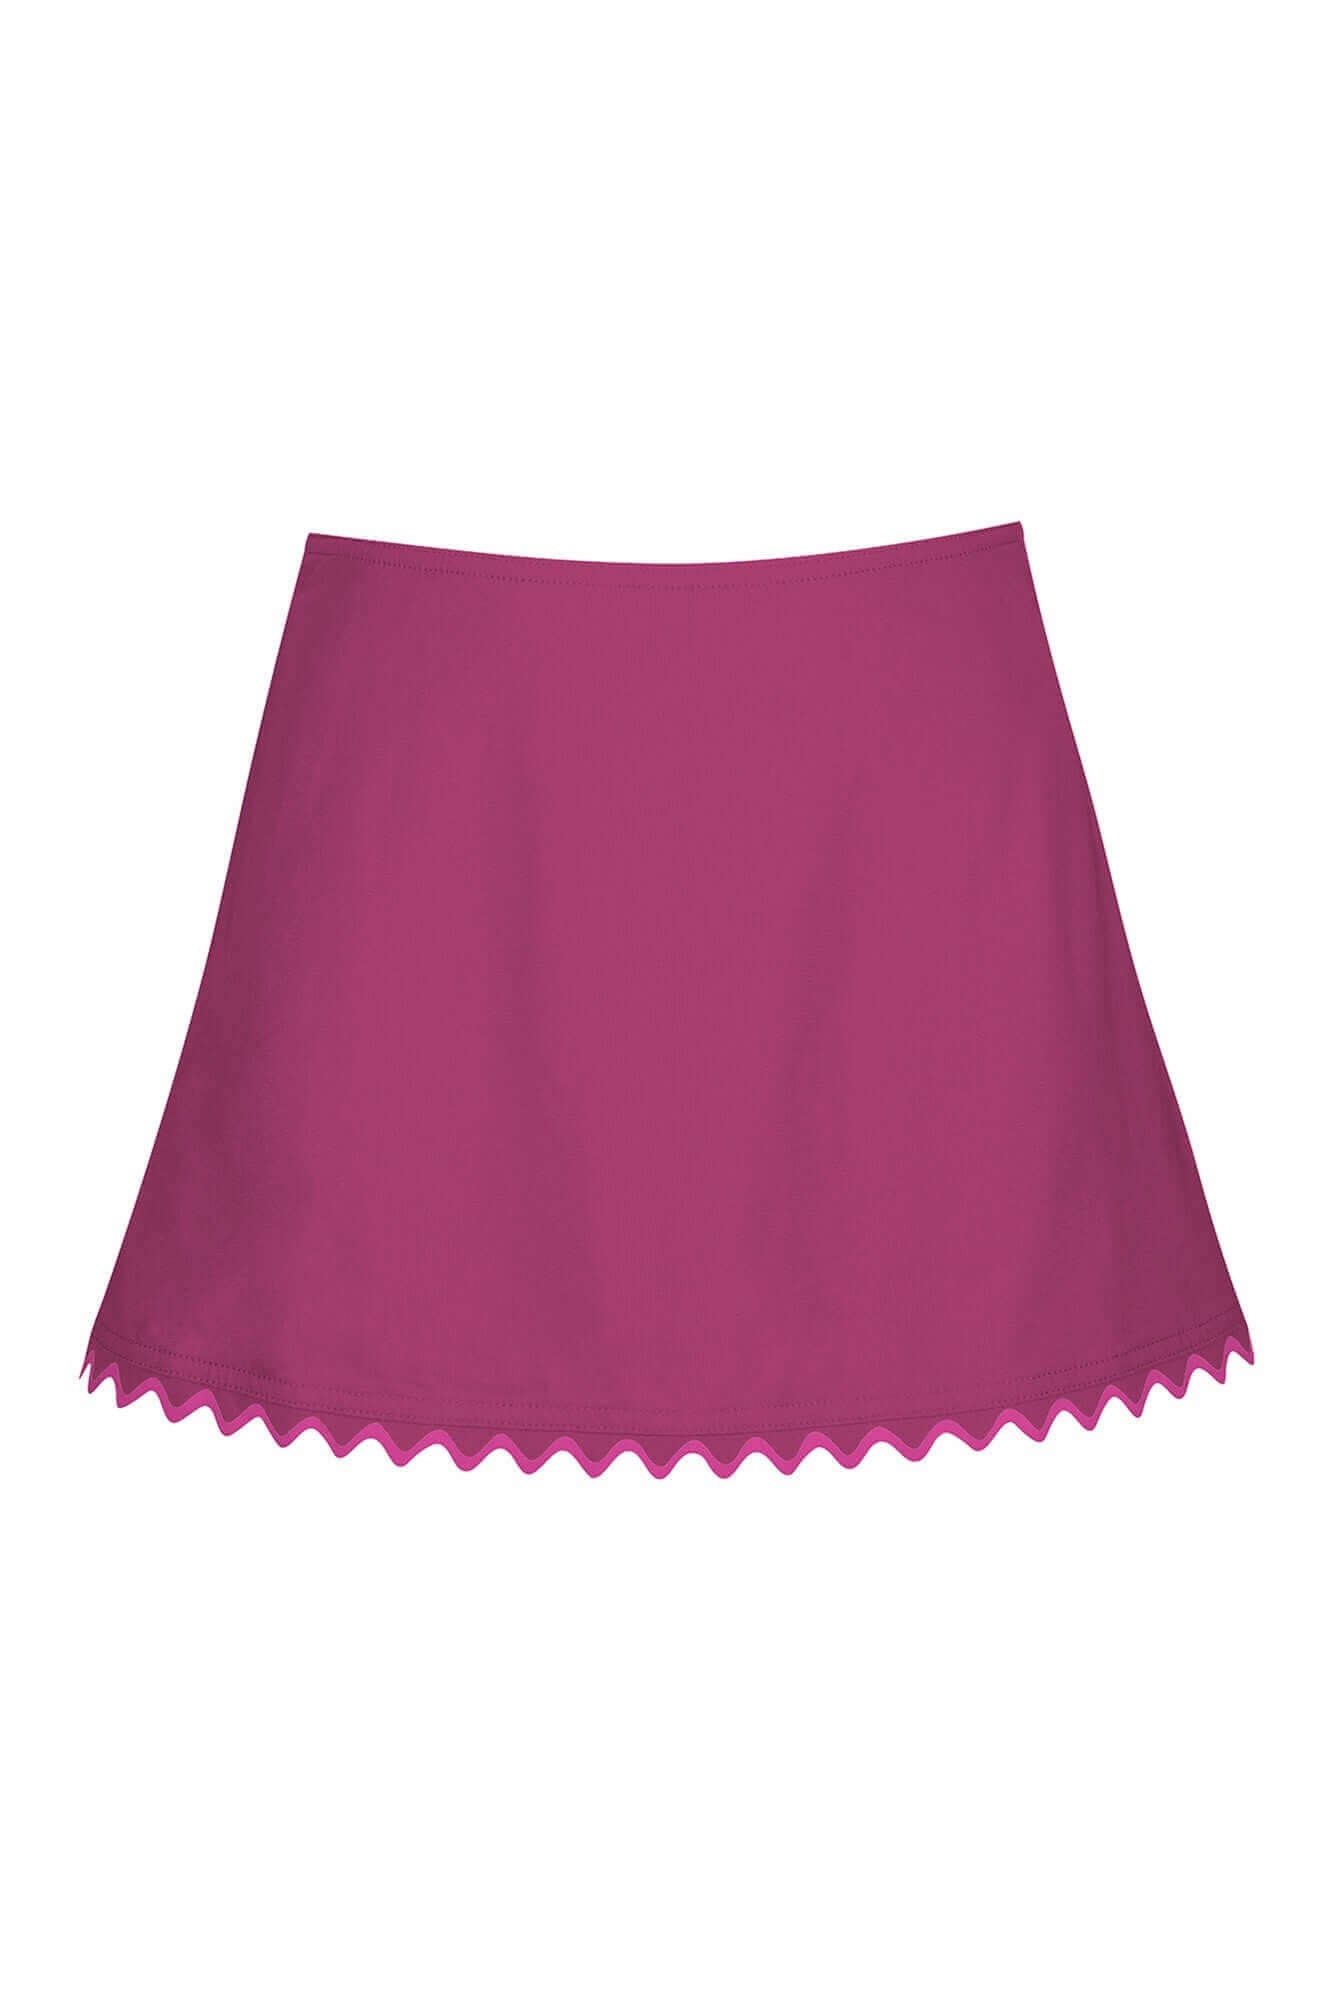 Amaya A-Line Skirt in Raspberry 432-C10